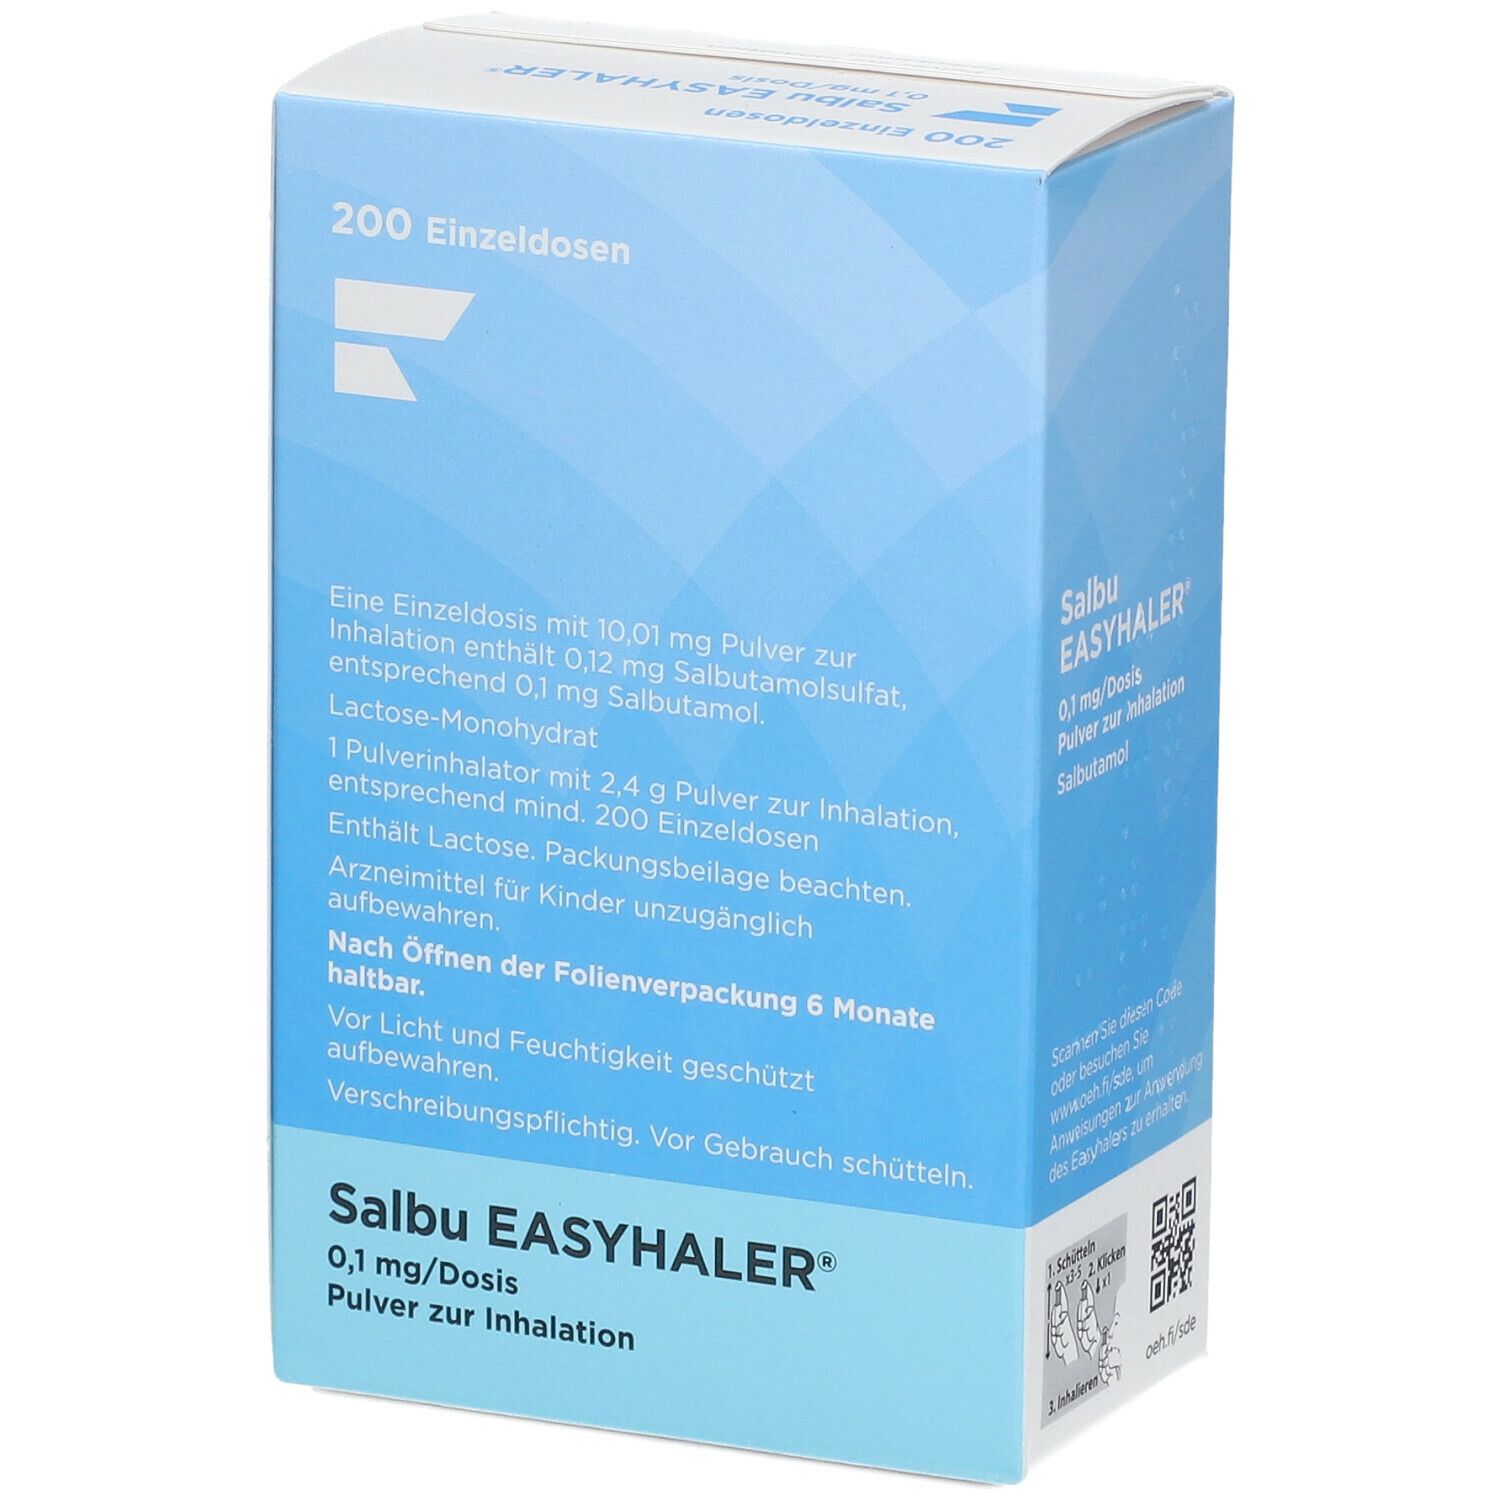 Salbu Easyhaler® 0,1 mg/Dosis